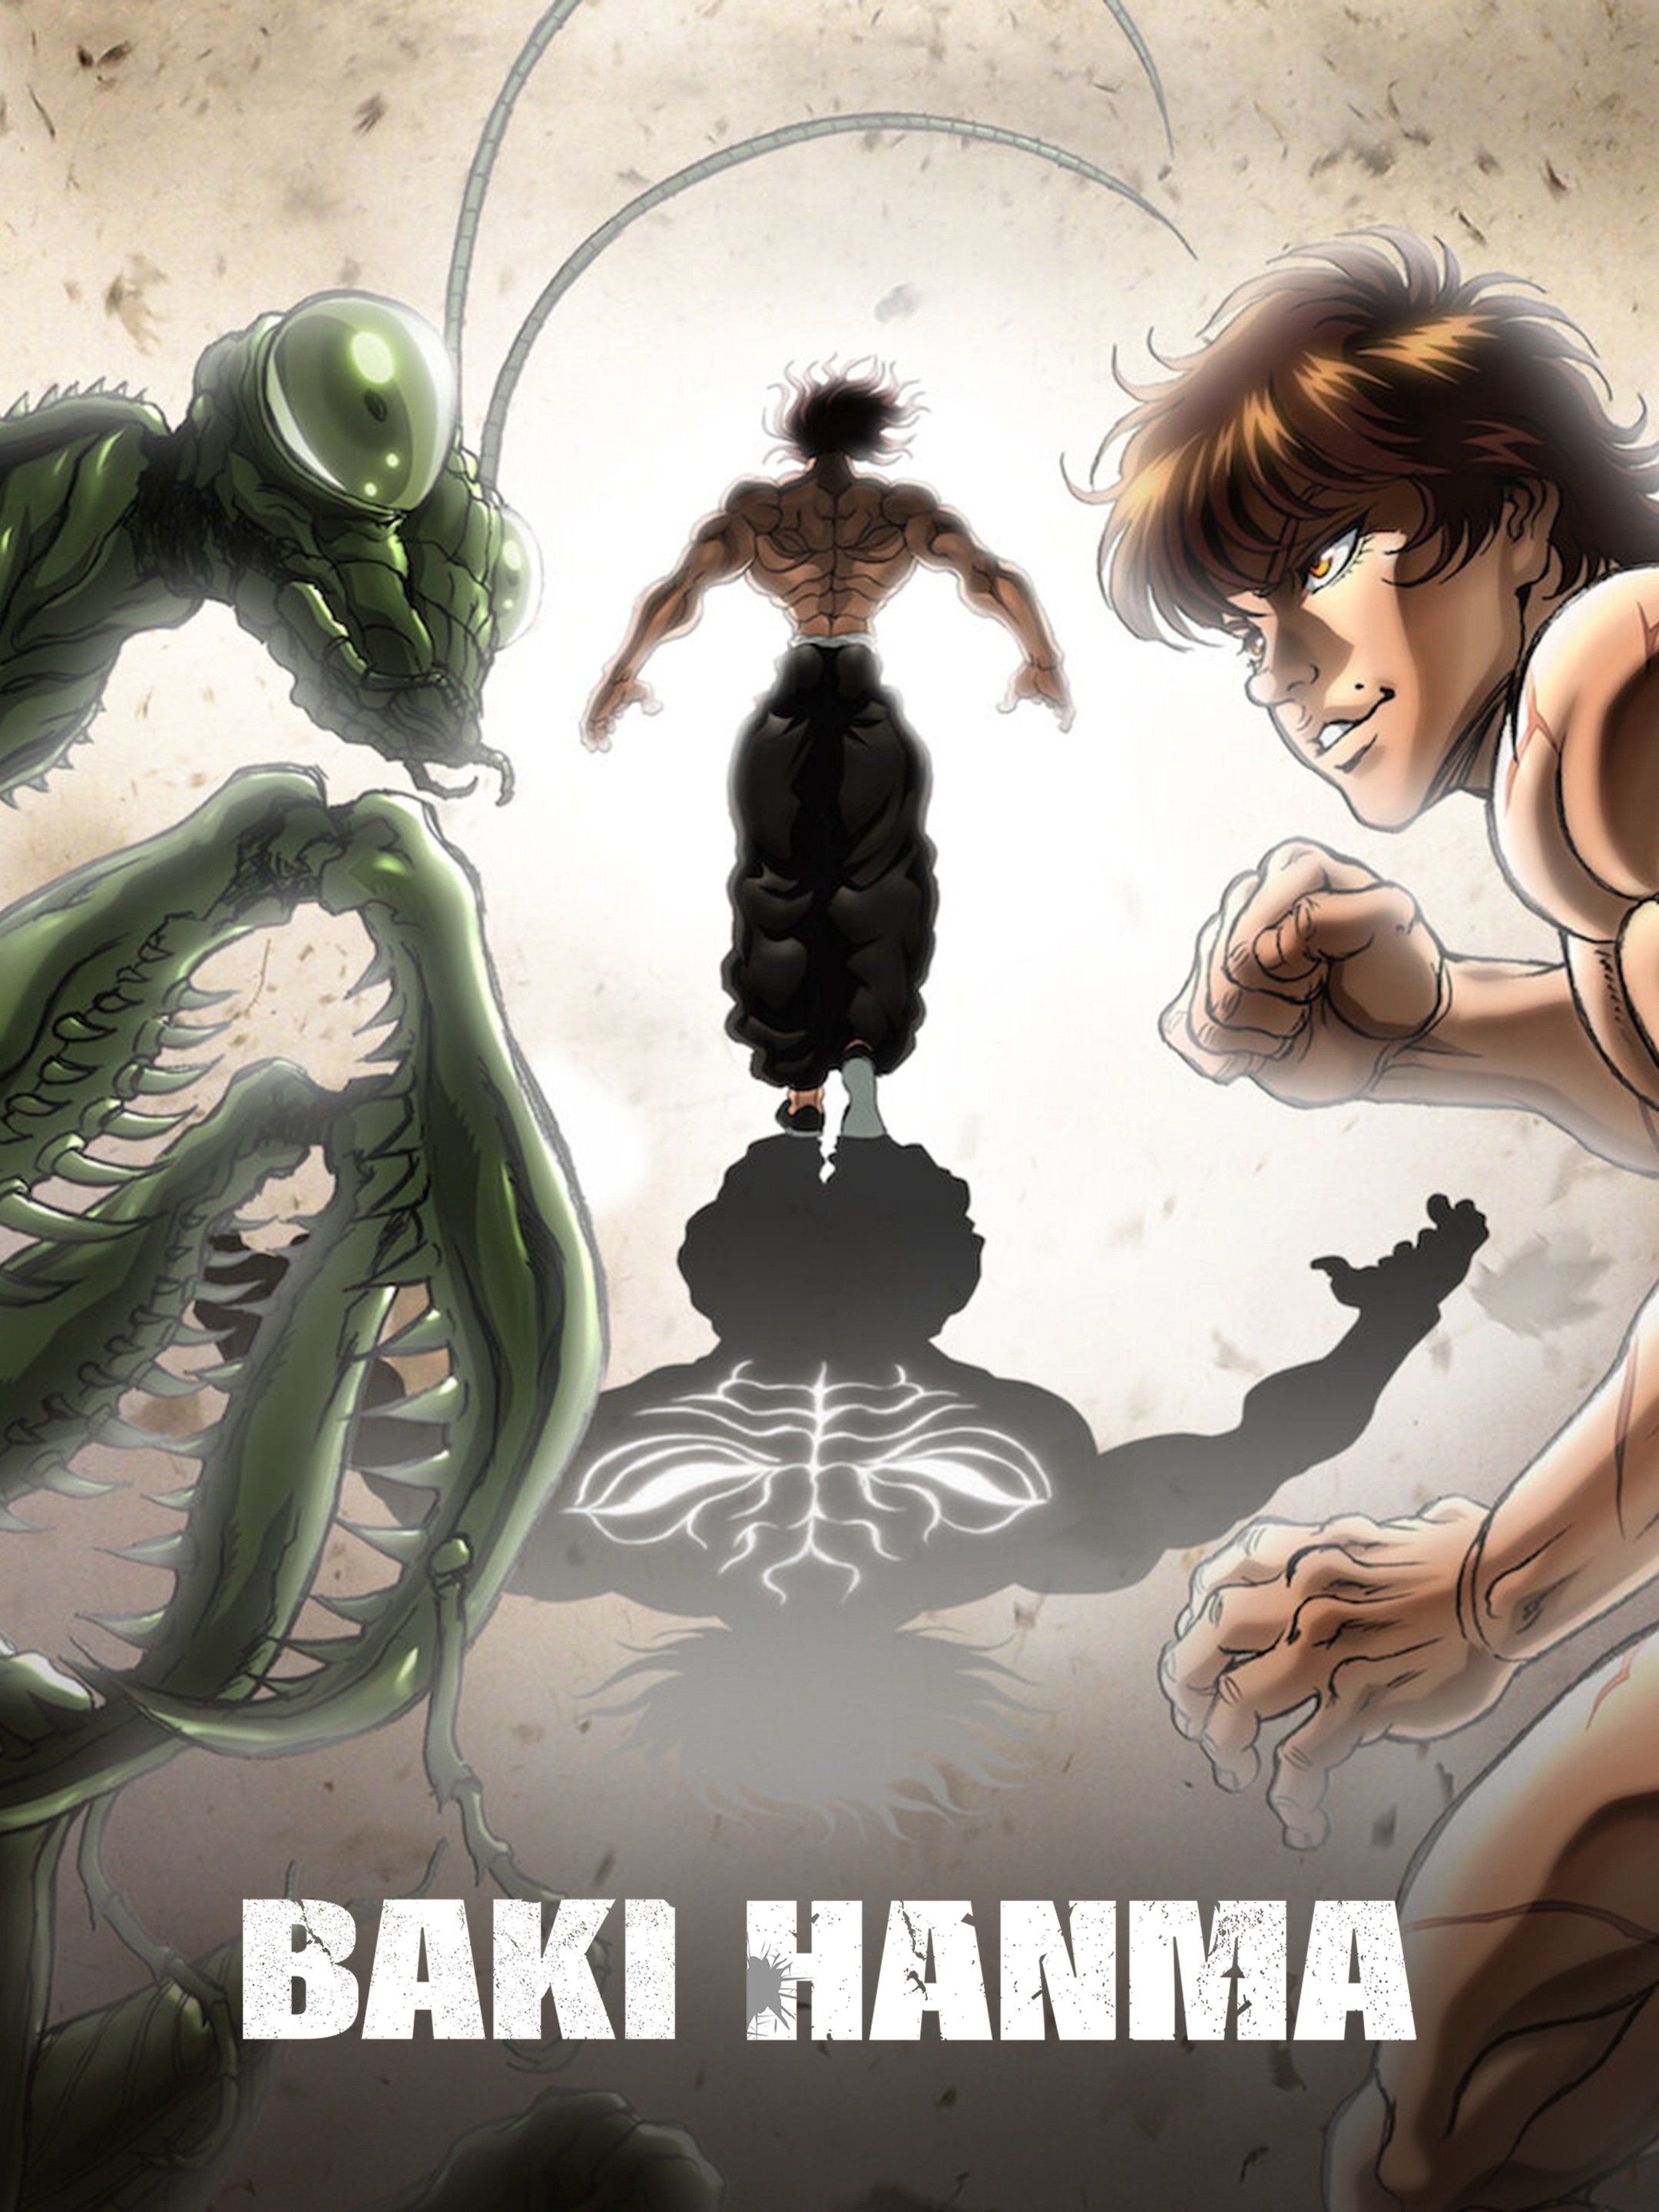 5 Anime Series to Watch If You Like 'Baki Hanma